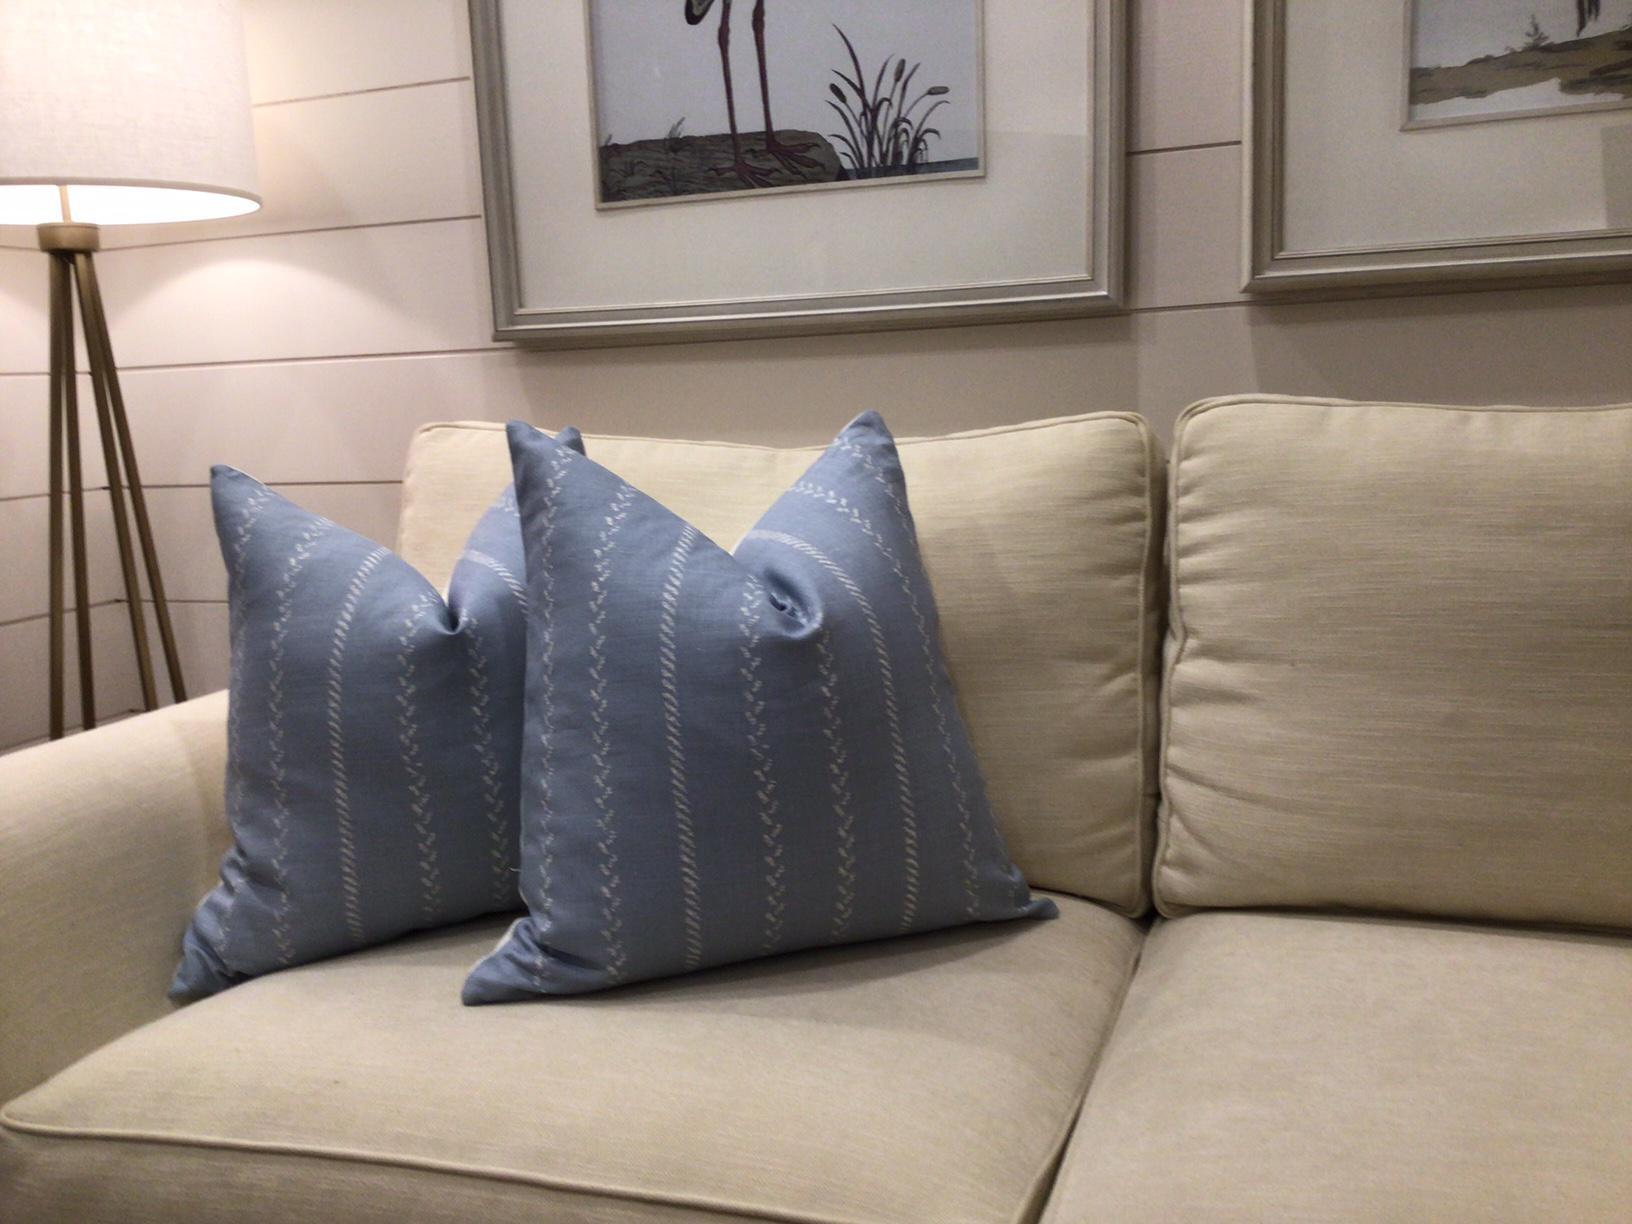 American Lee Jofa “Pelham Stripe” in Soft Blue & White Pillows- a Pair For Sale